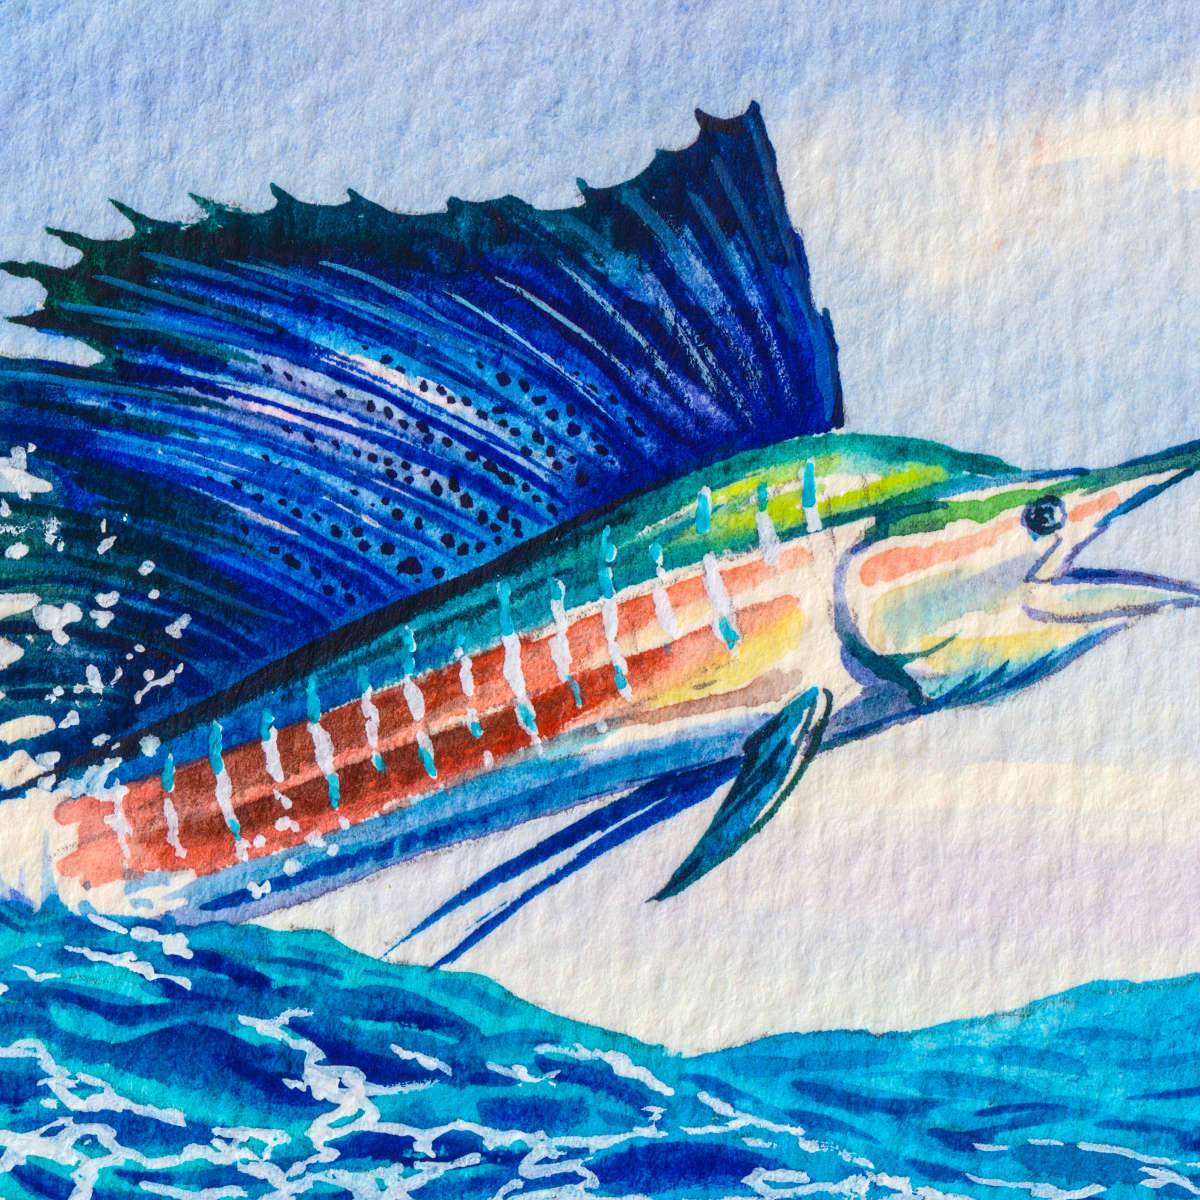 Wahoo Fish Wall Art: Canvas Prints, Art Prints & Framed Canvas